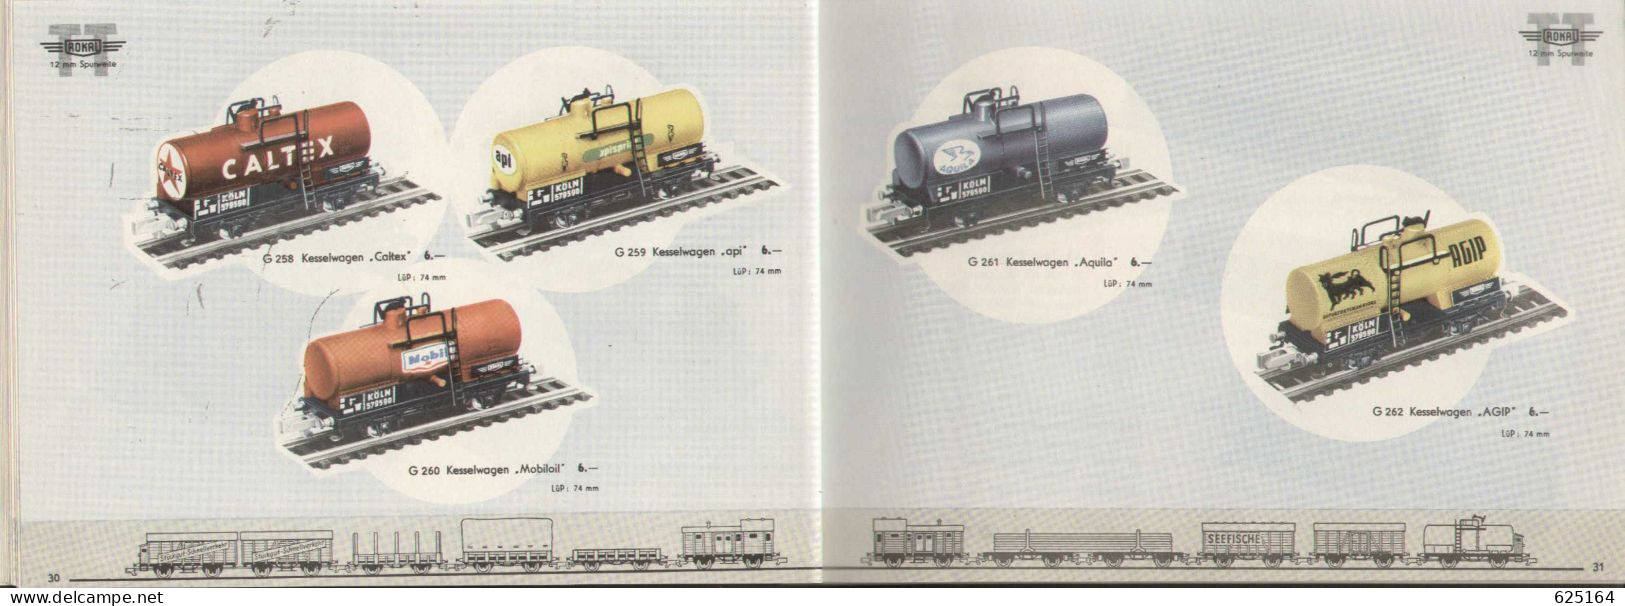 Catalogue Rokal 1959-60 Modellbahn Katalog Spurweit TT 1:120 12 Mm - Allemand